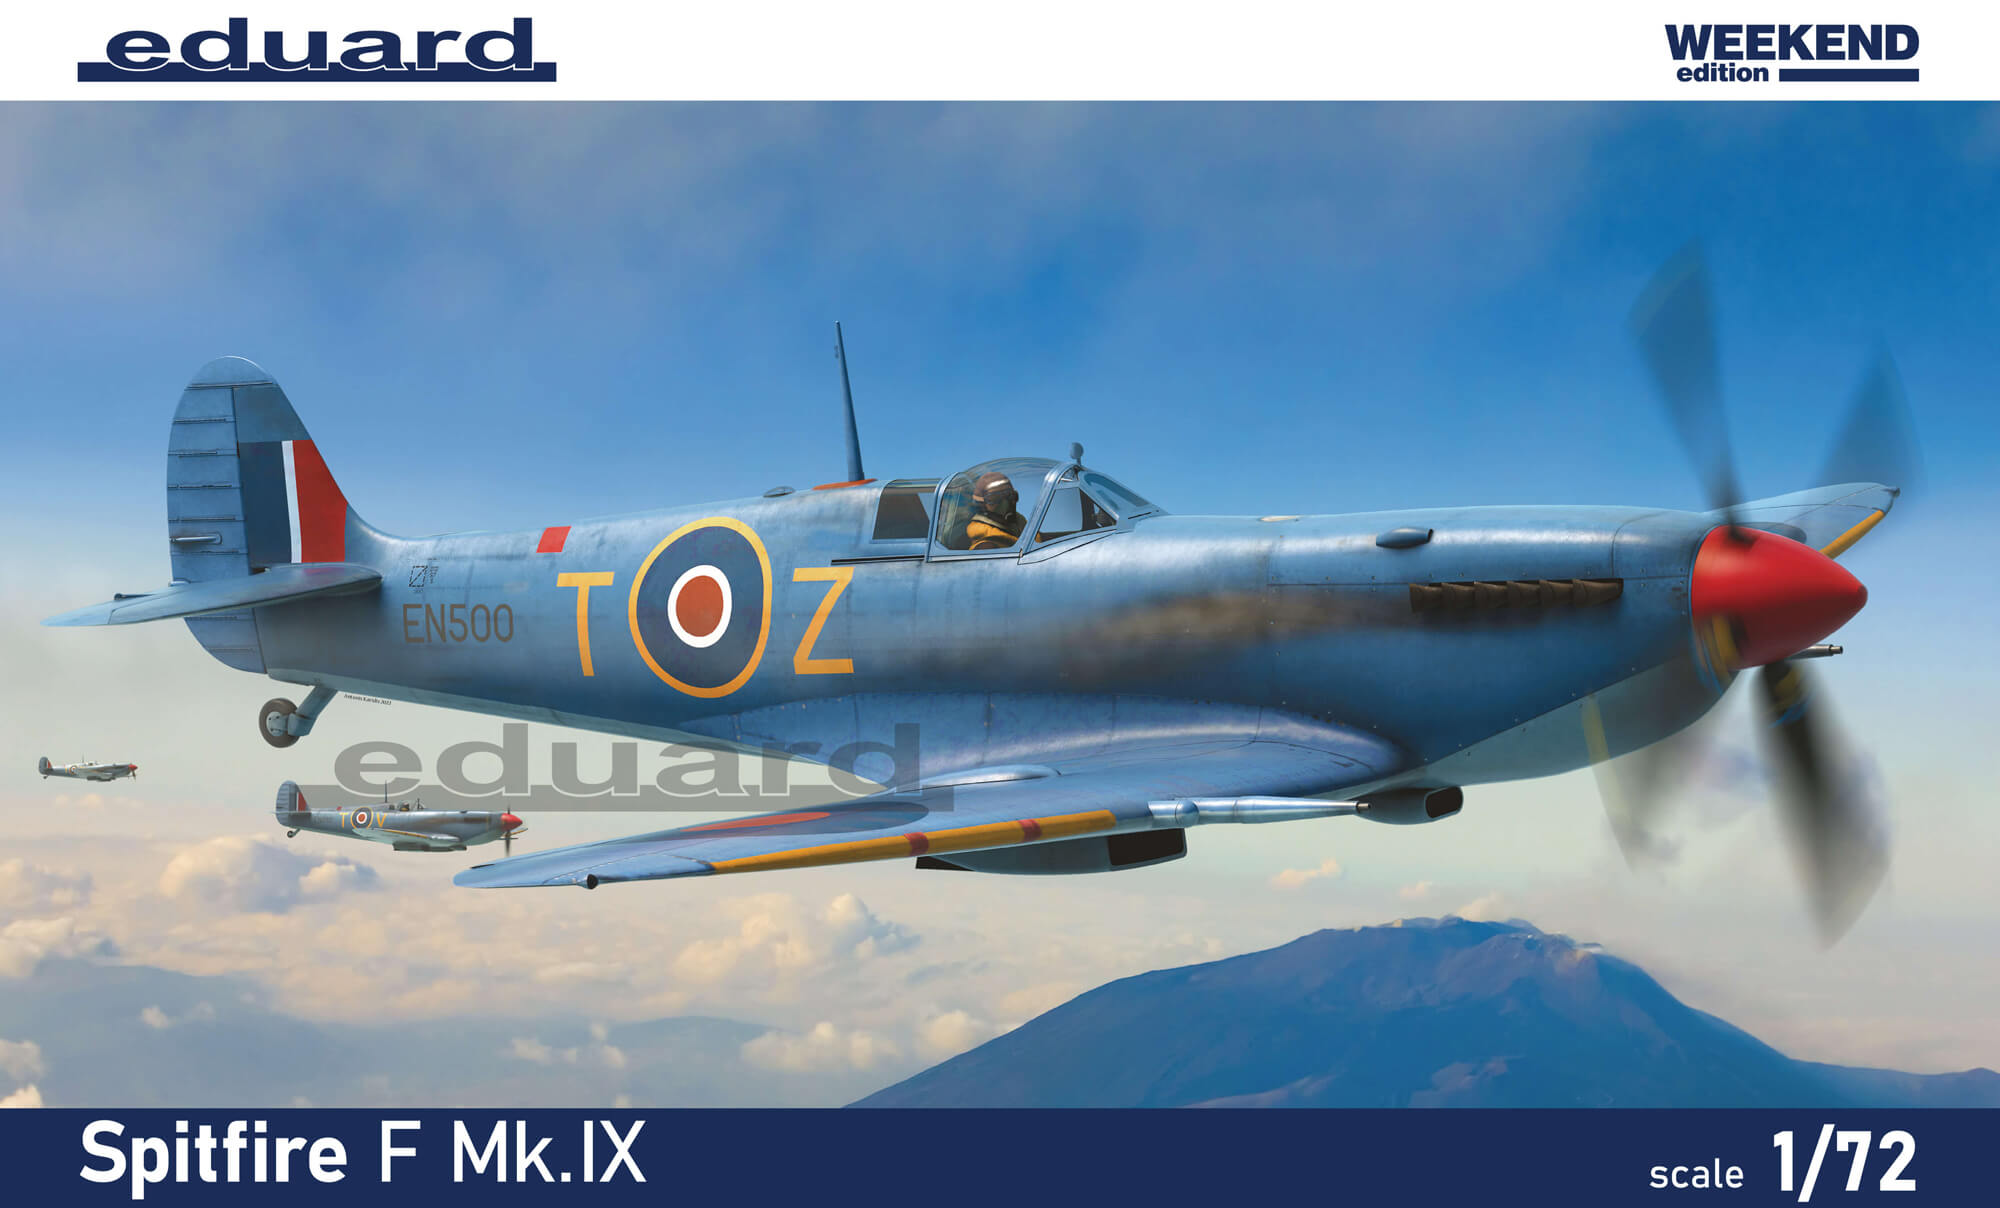 1/72 Spitfire F Mk.IX 1/72 (Weekend edition)